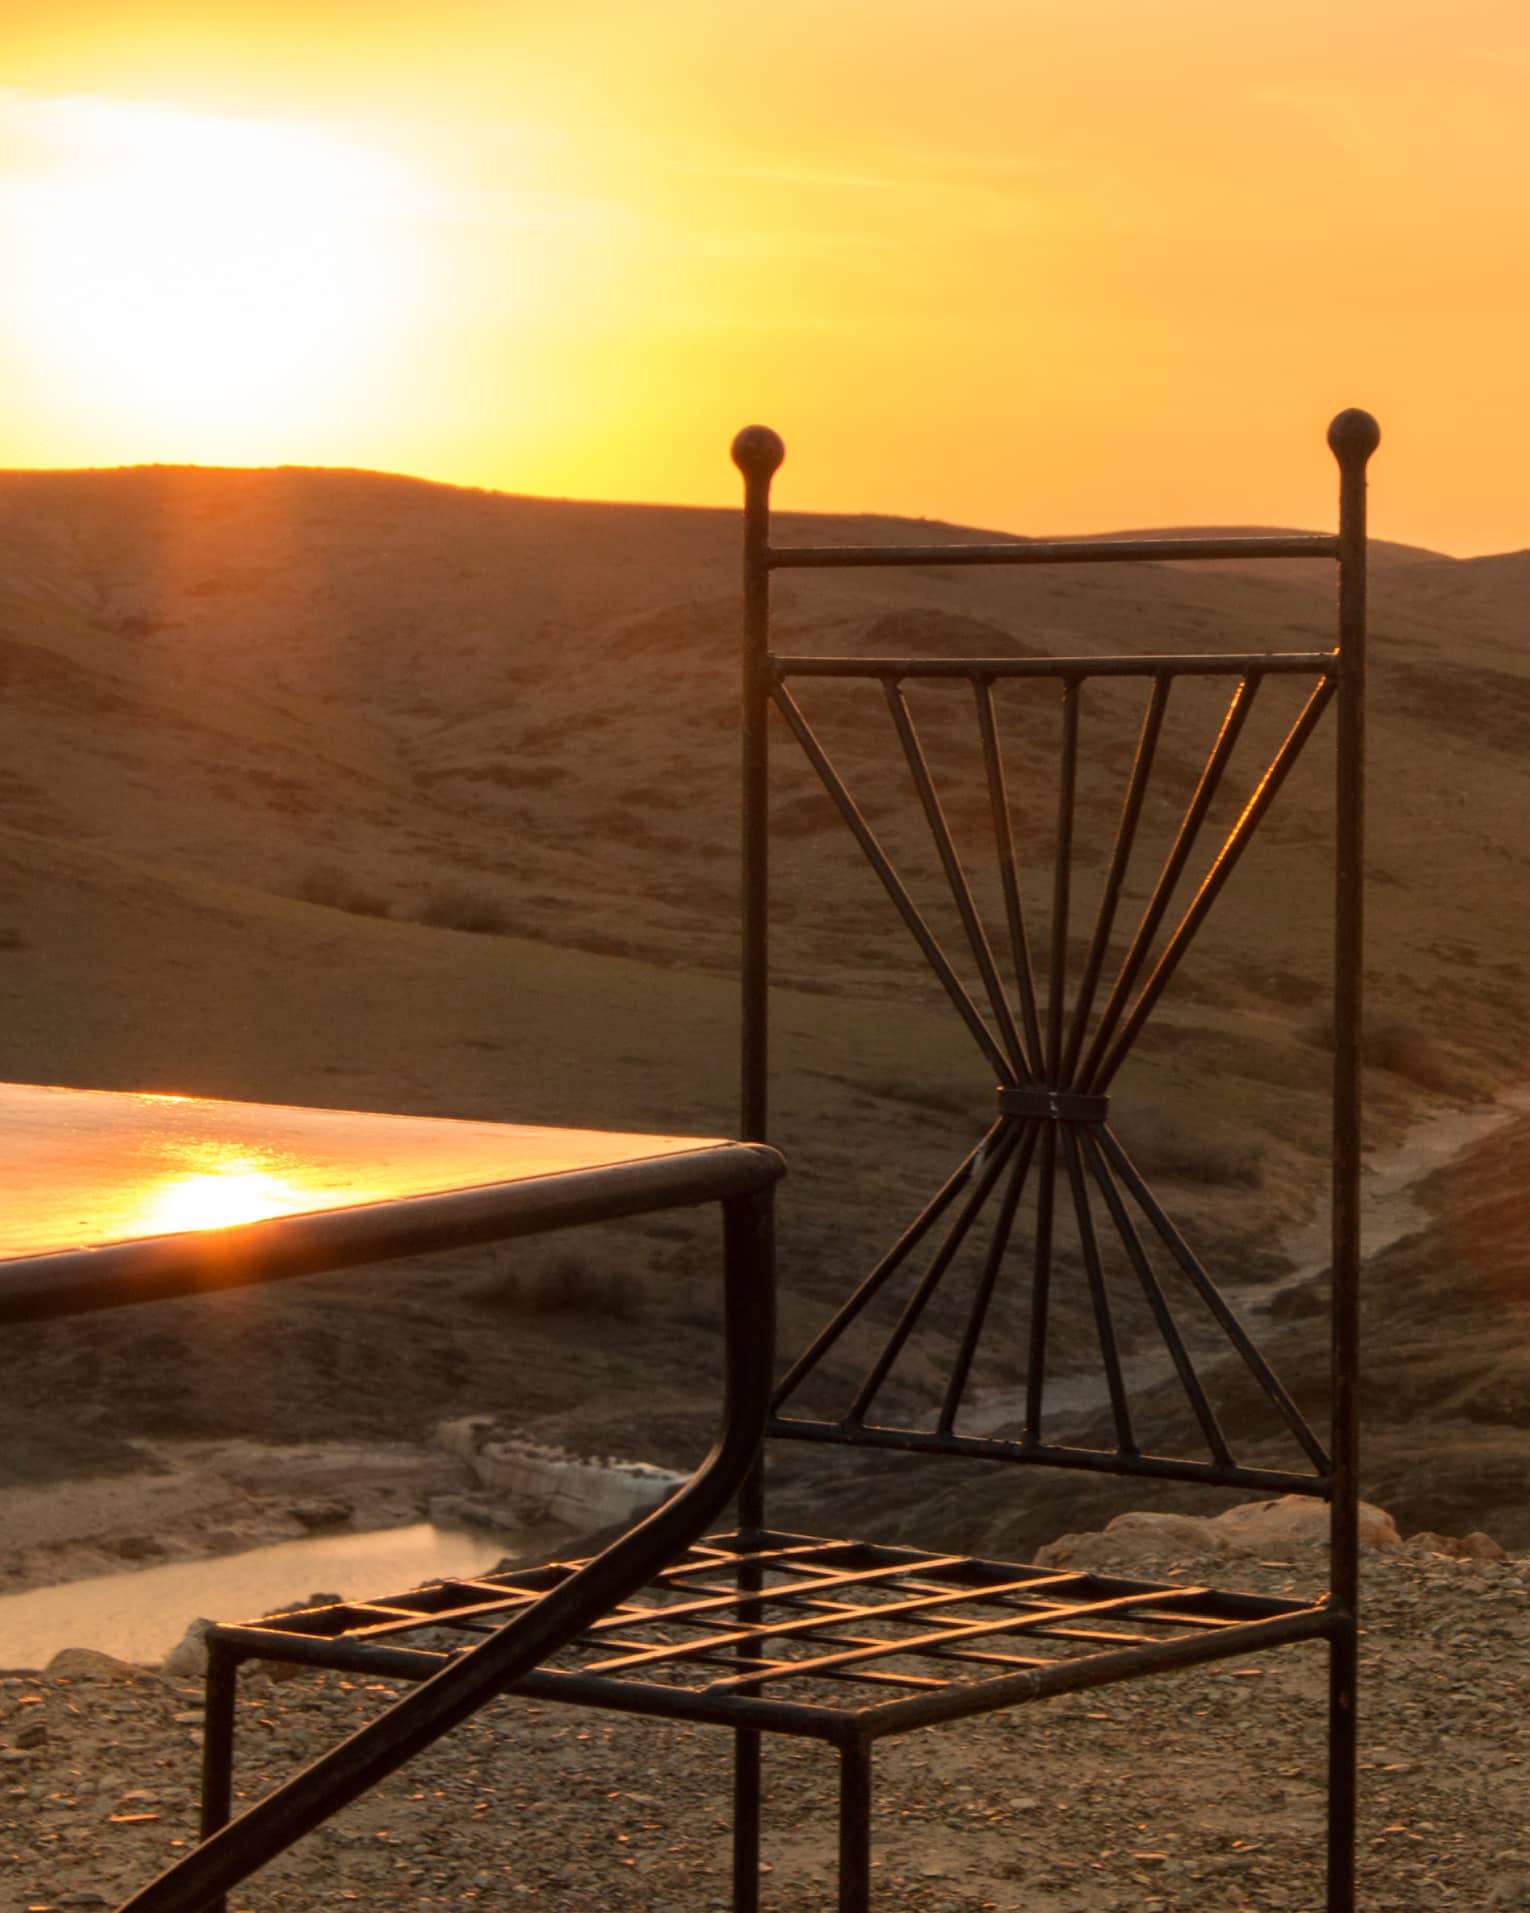 Corner of table, chair in desert at sunset